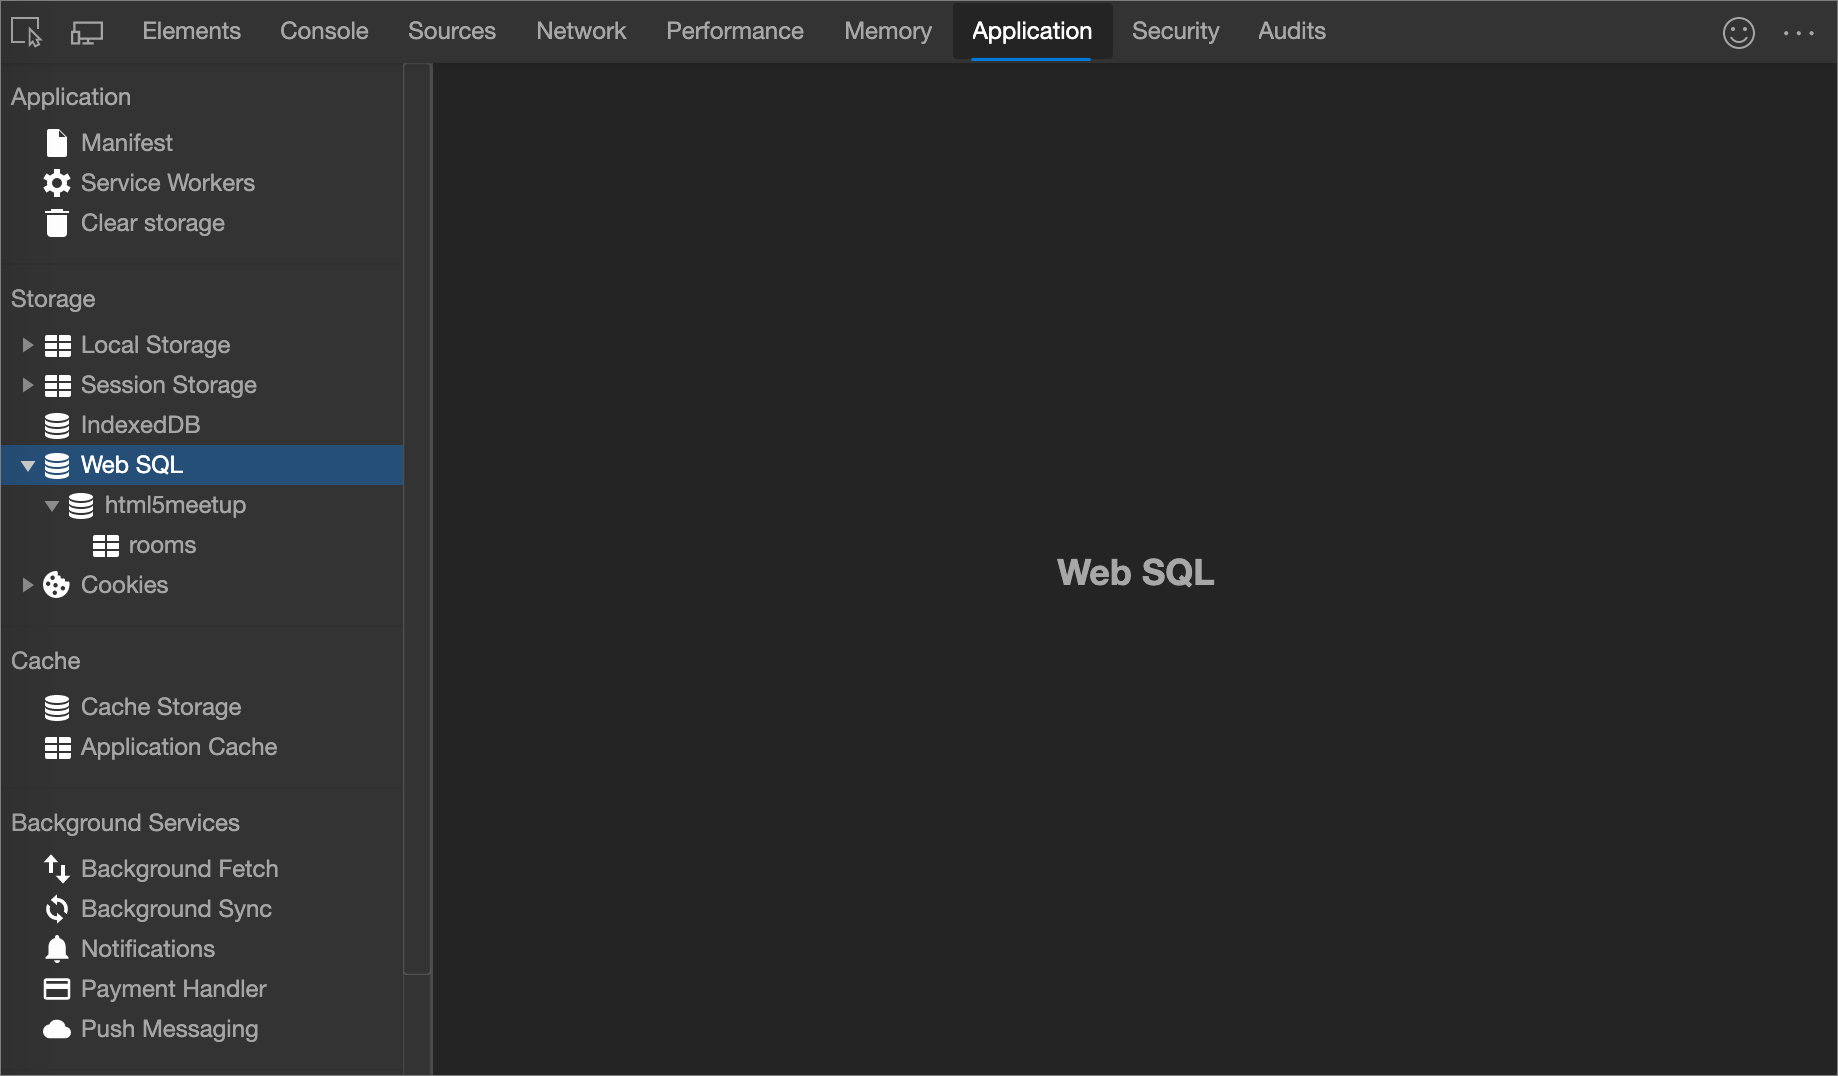 The Web SQL pane